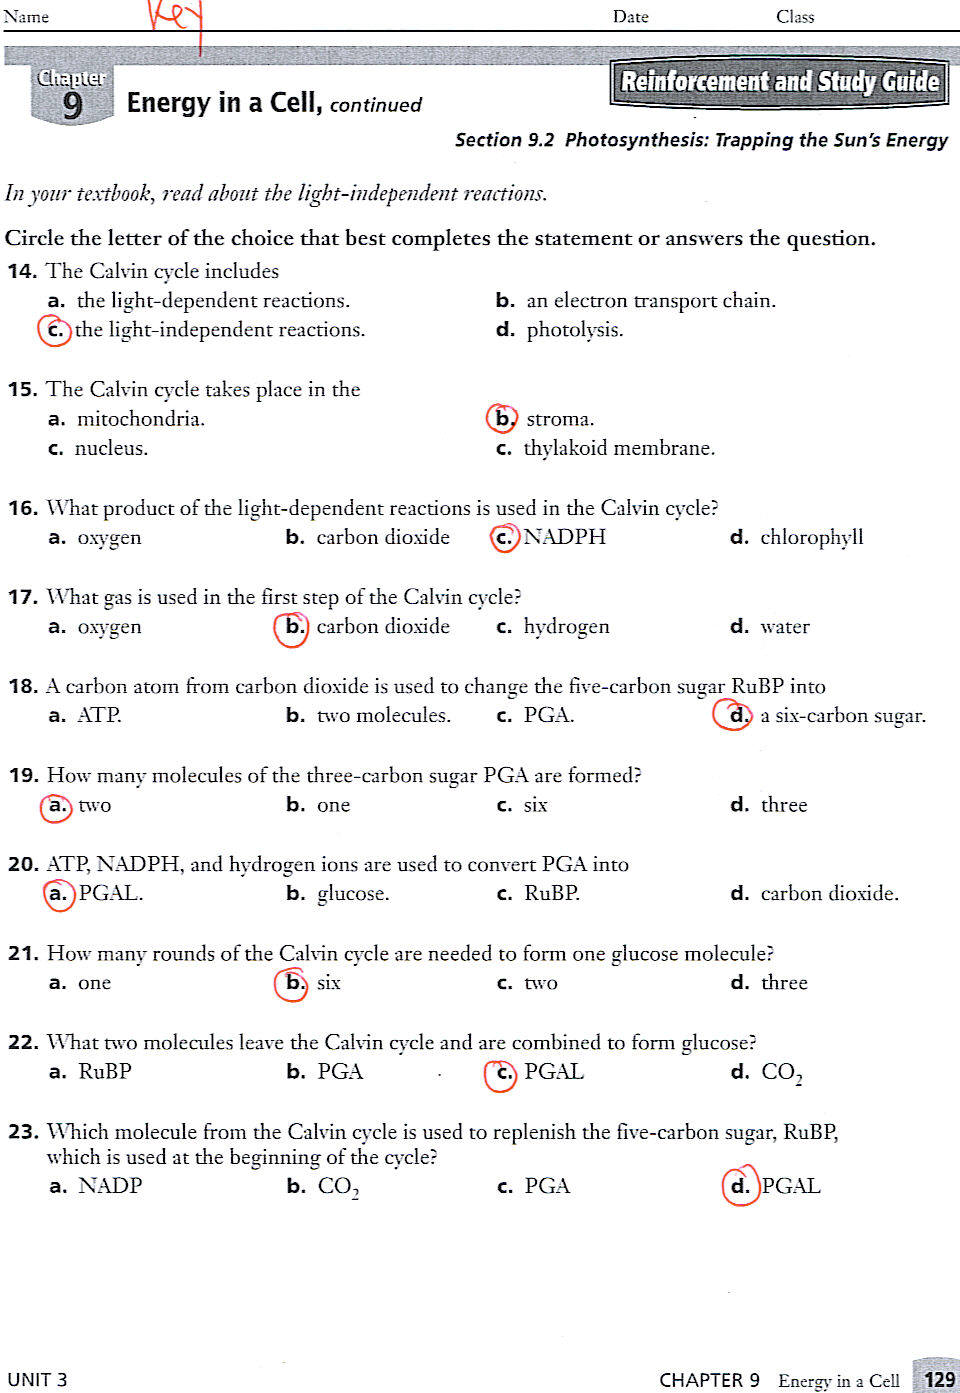 9th-grade-biology-worksheet-answers